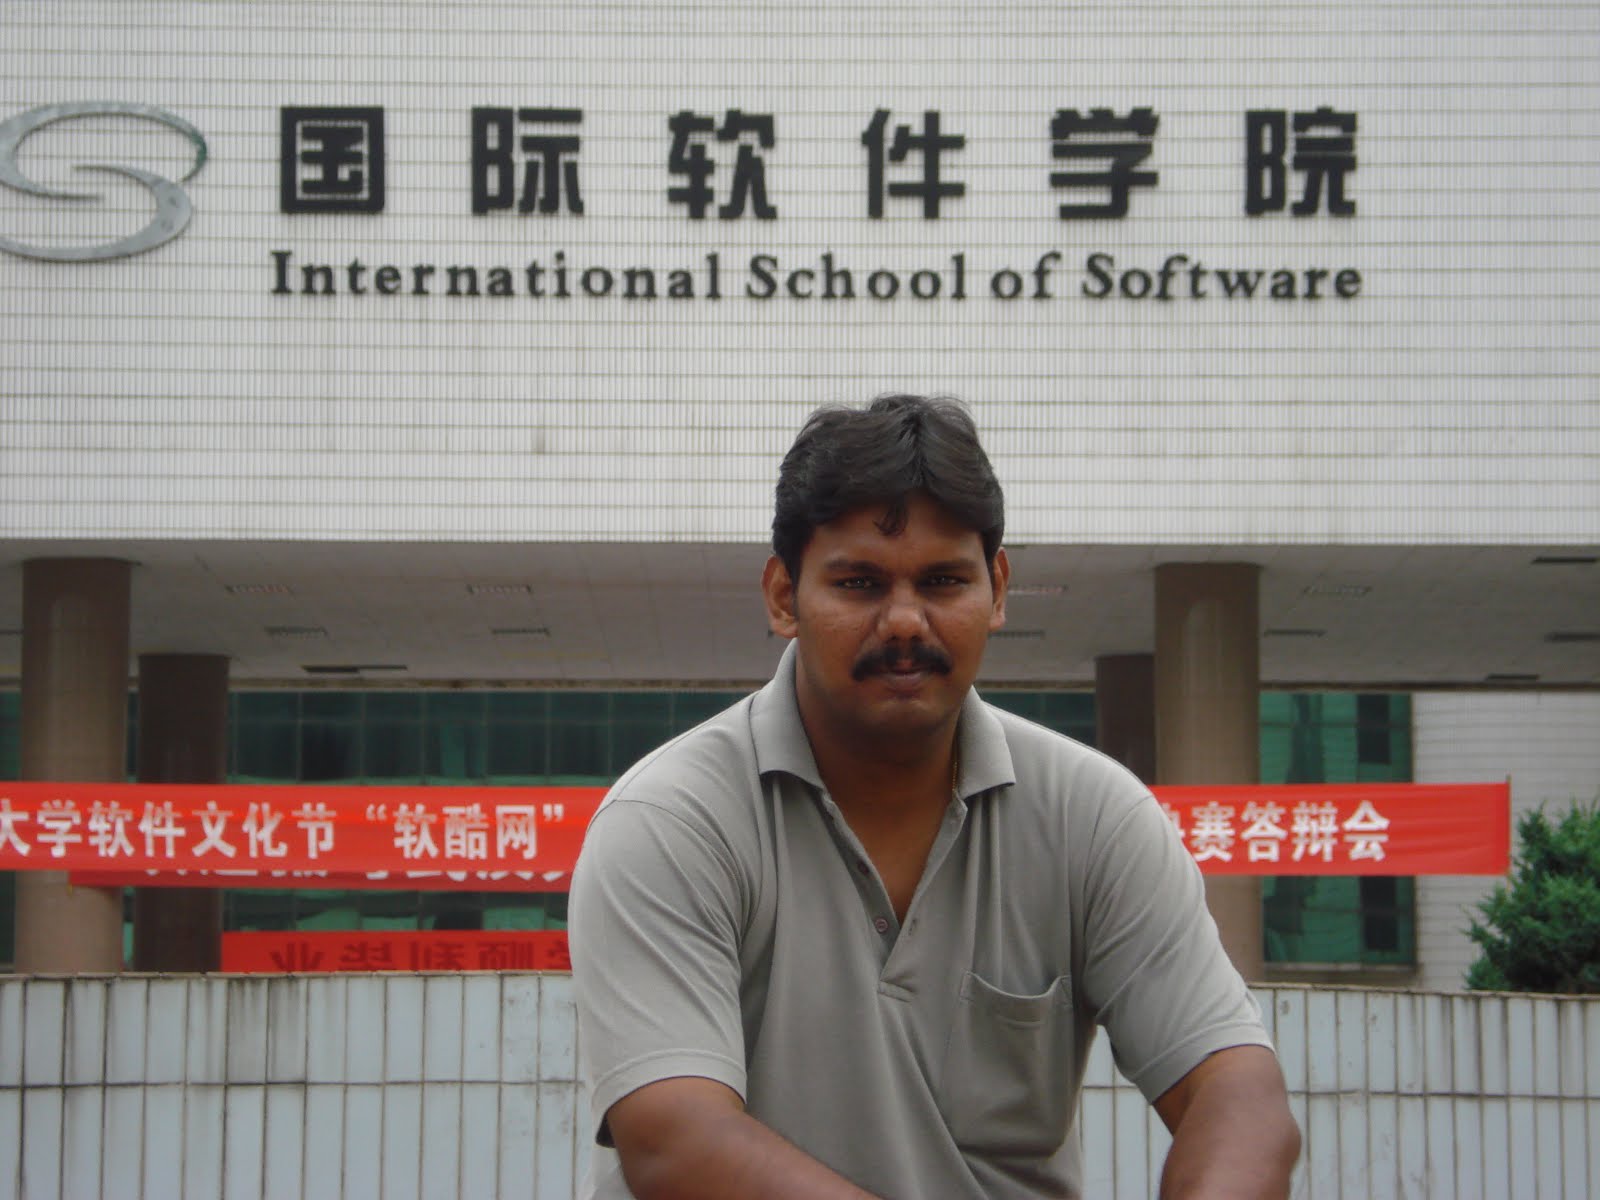 My International career started at Wuhan University, China